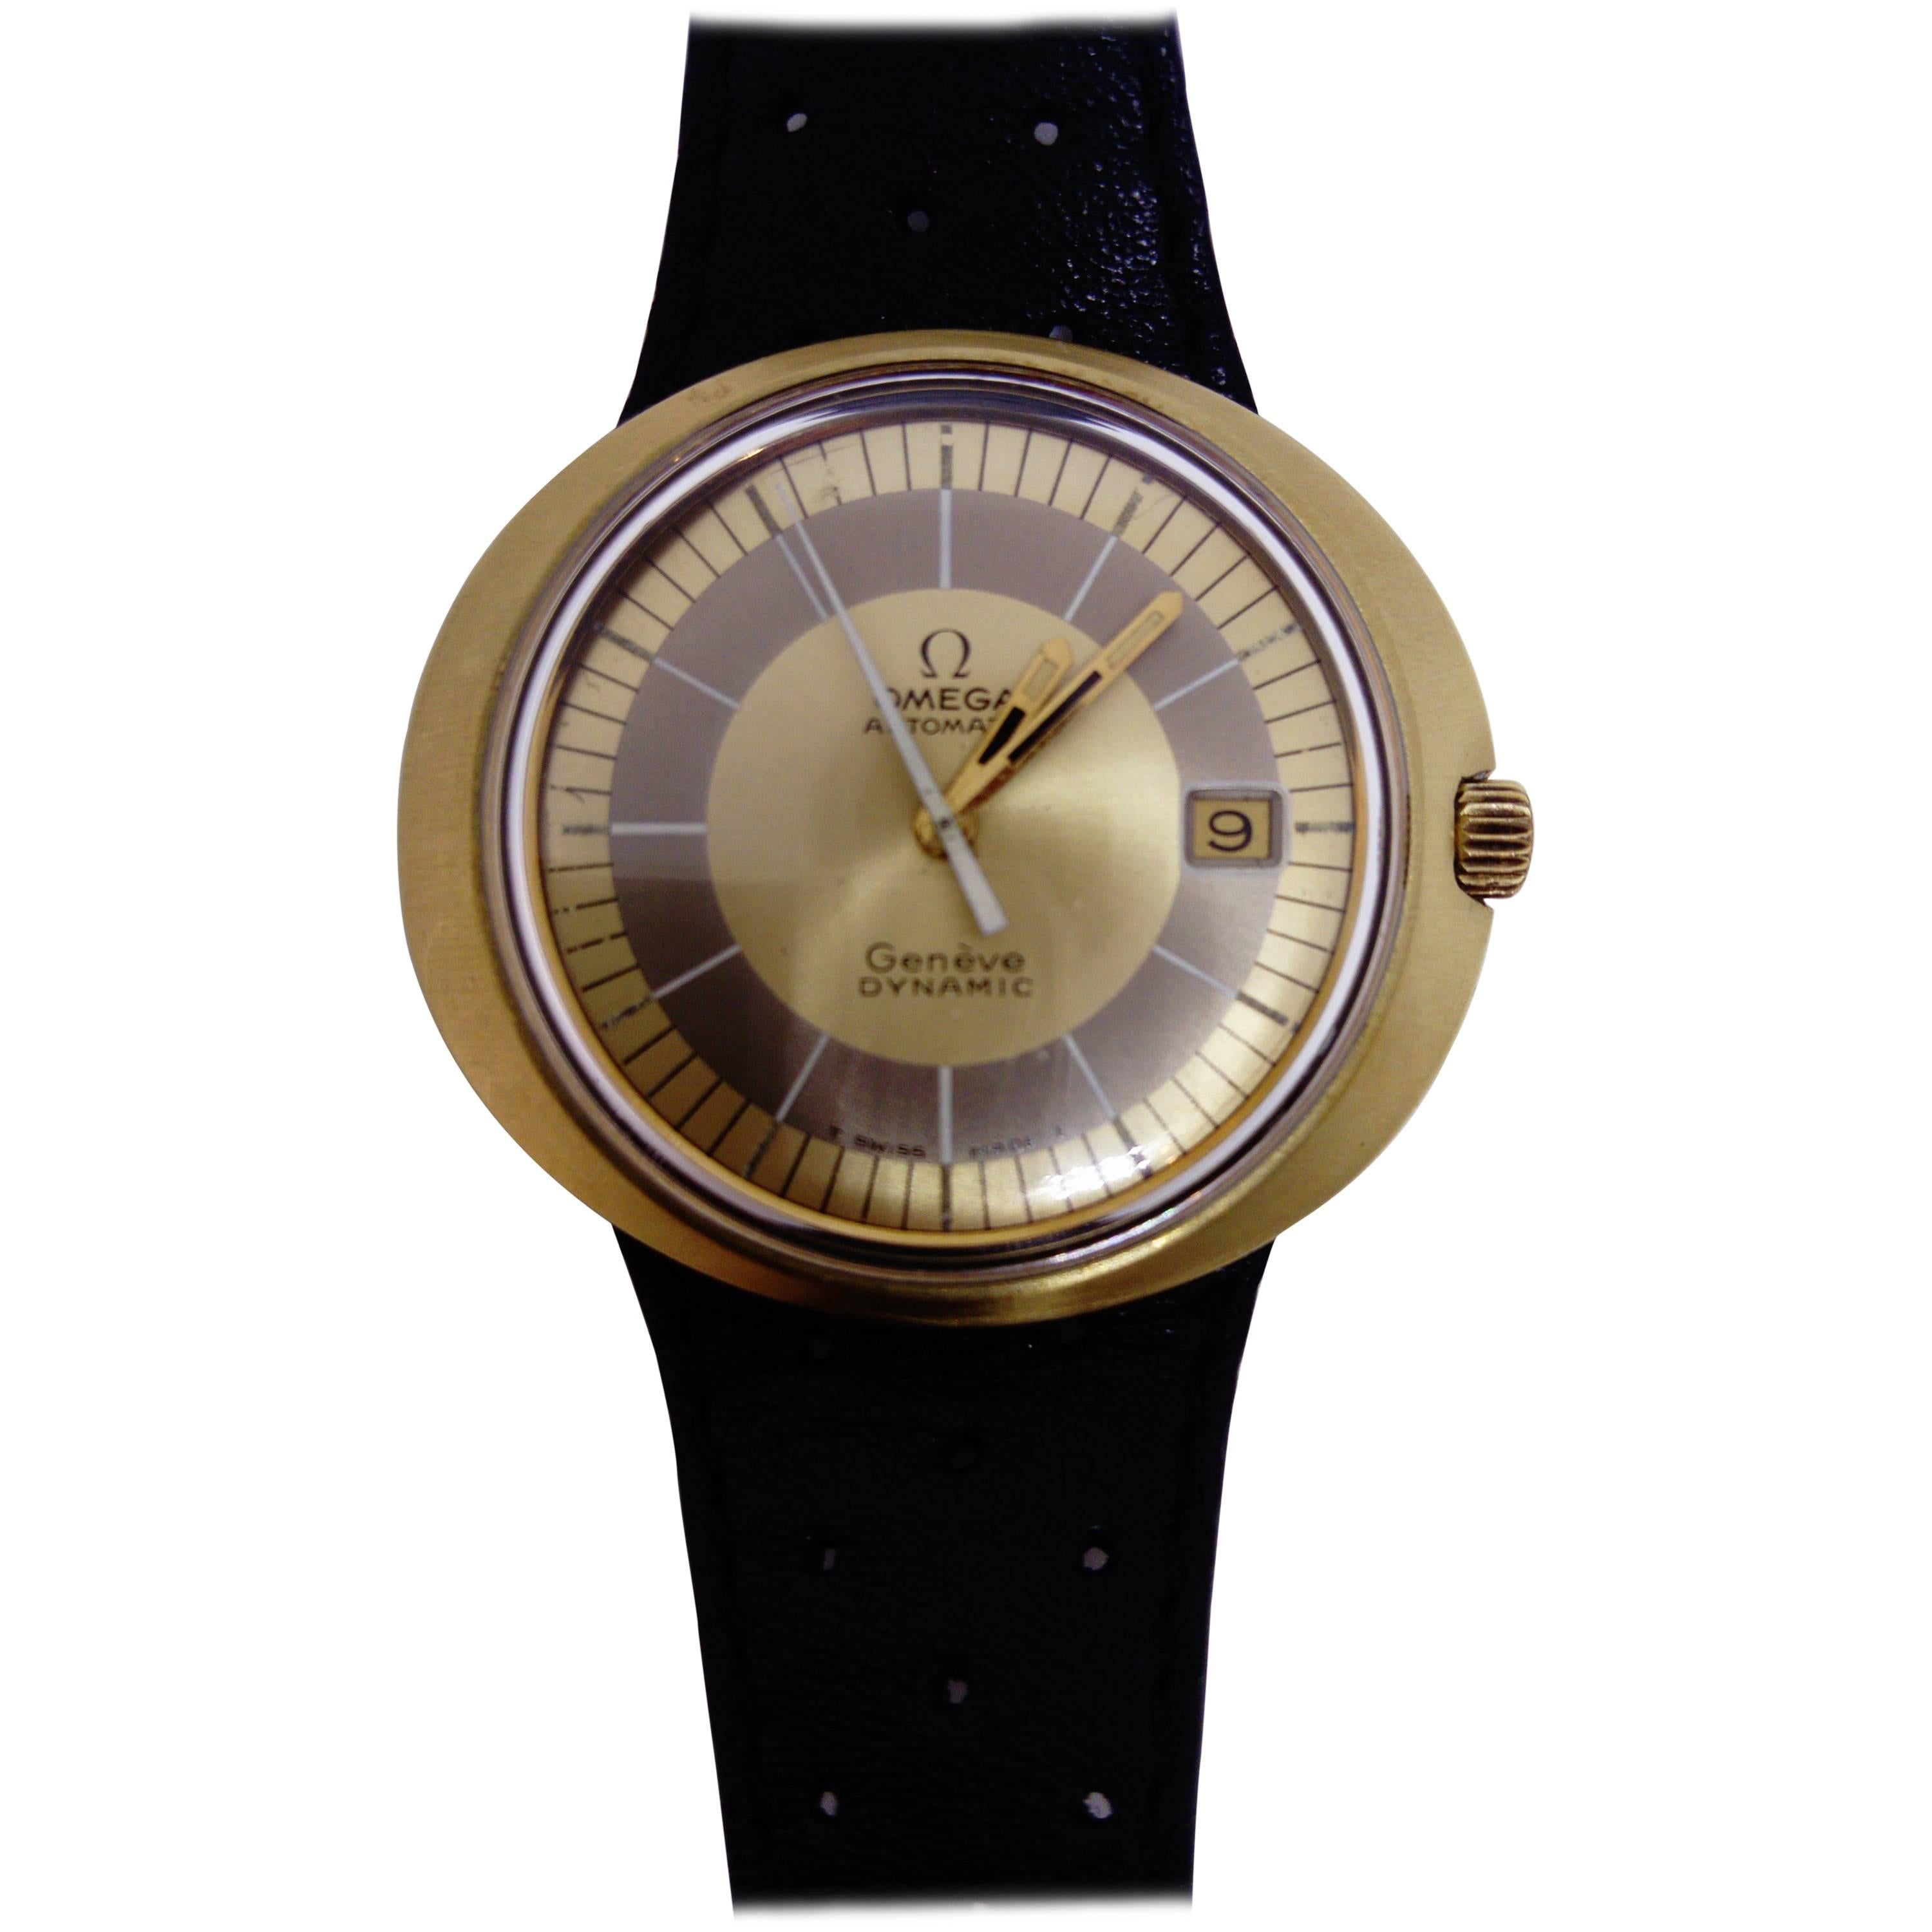 1978 Omega Dynamique Wristwatch